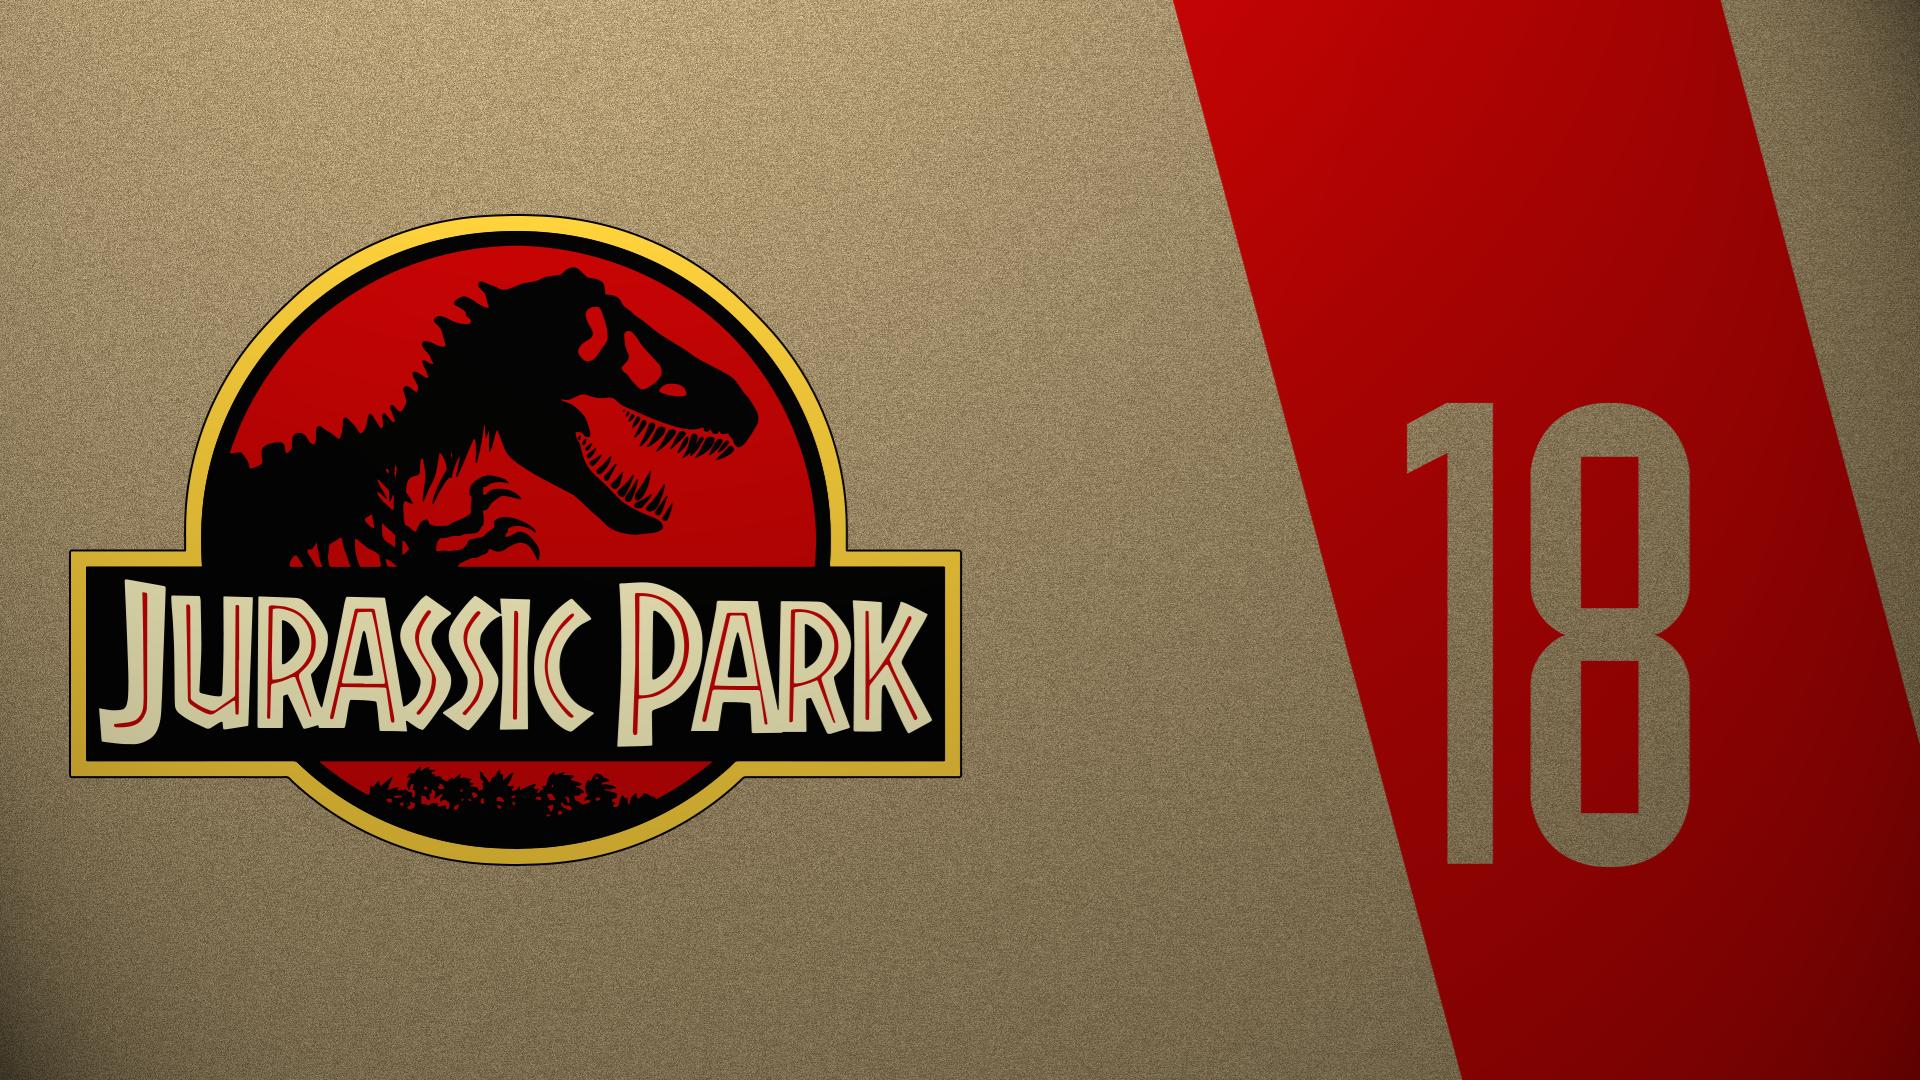 Jurassic Park Logo 4k - 1920x1080 Wallpaper - teahub.io